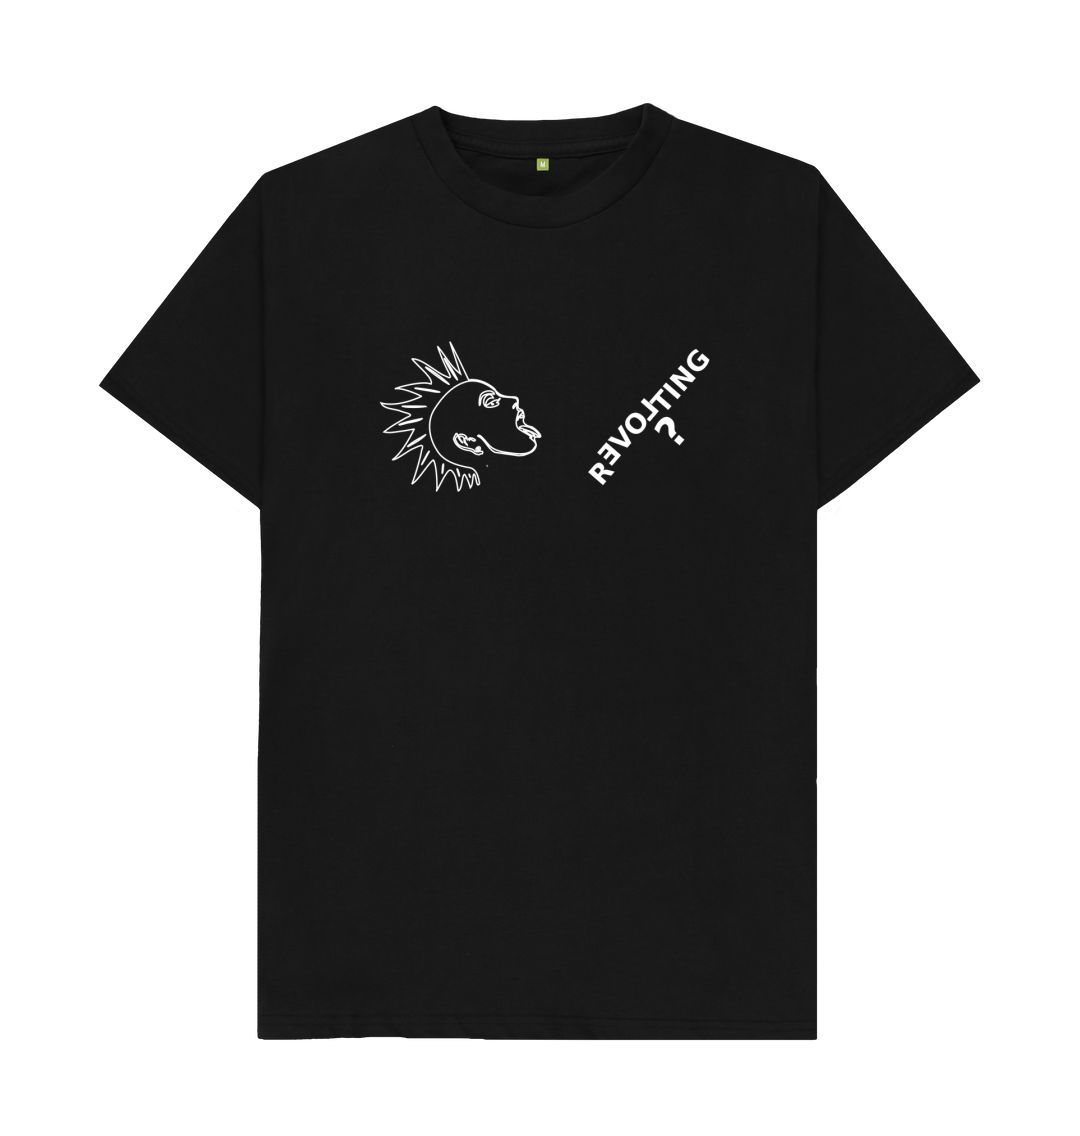 Black Revolting unisex T-shirt